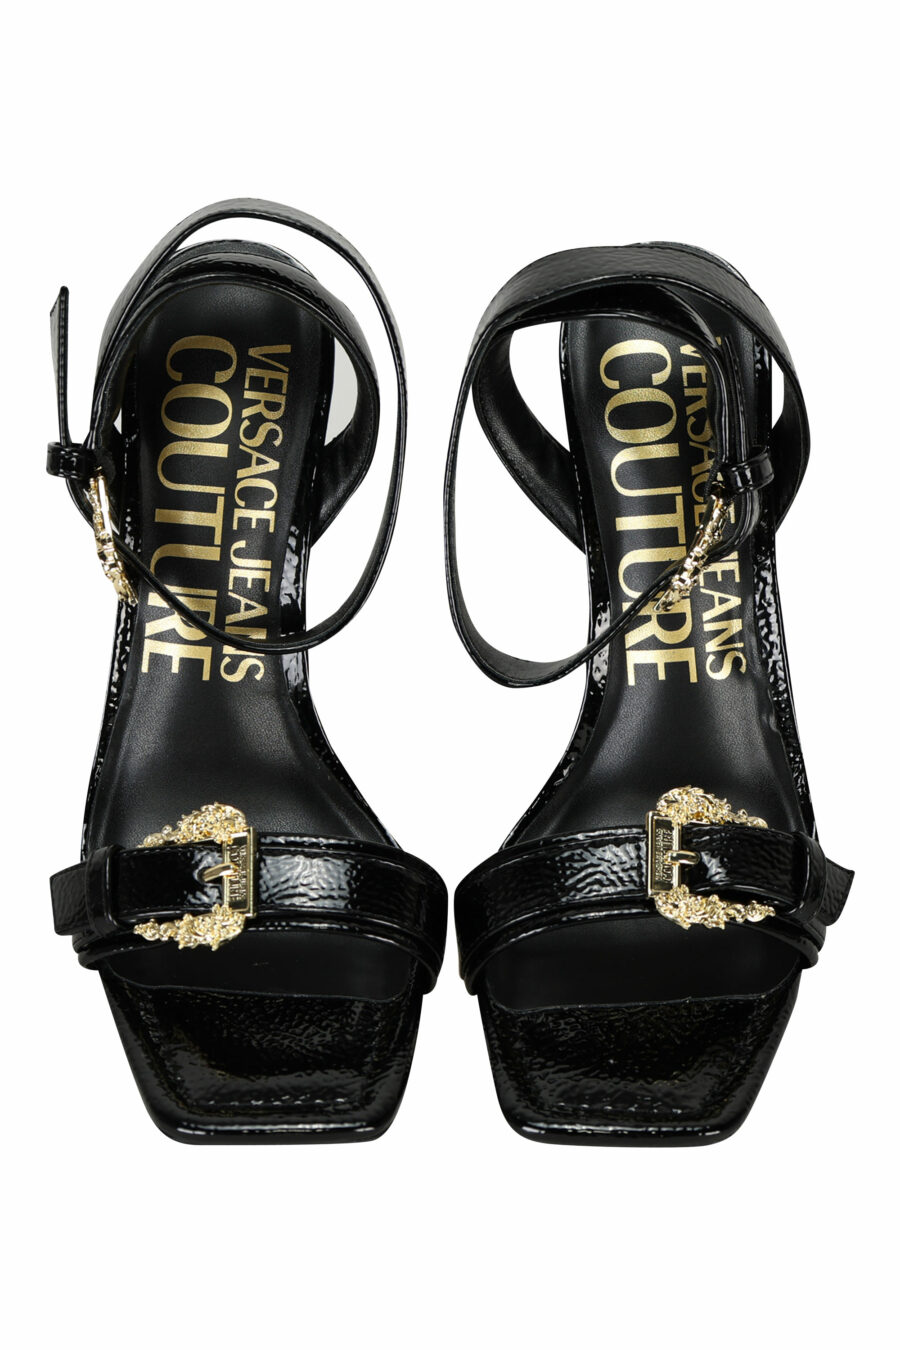 Black heels with gold baroque buckle - 8052019662979 4